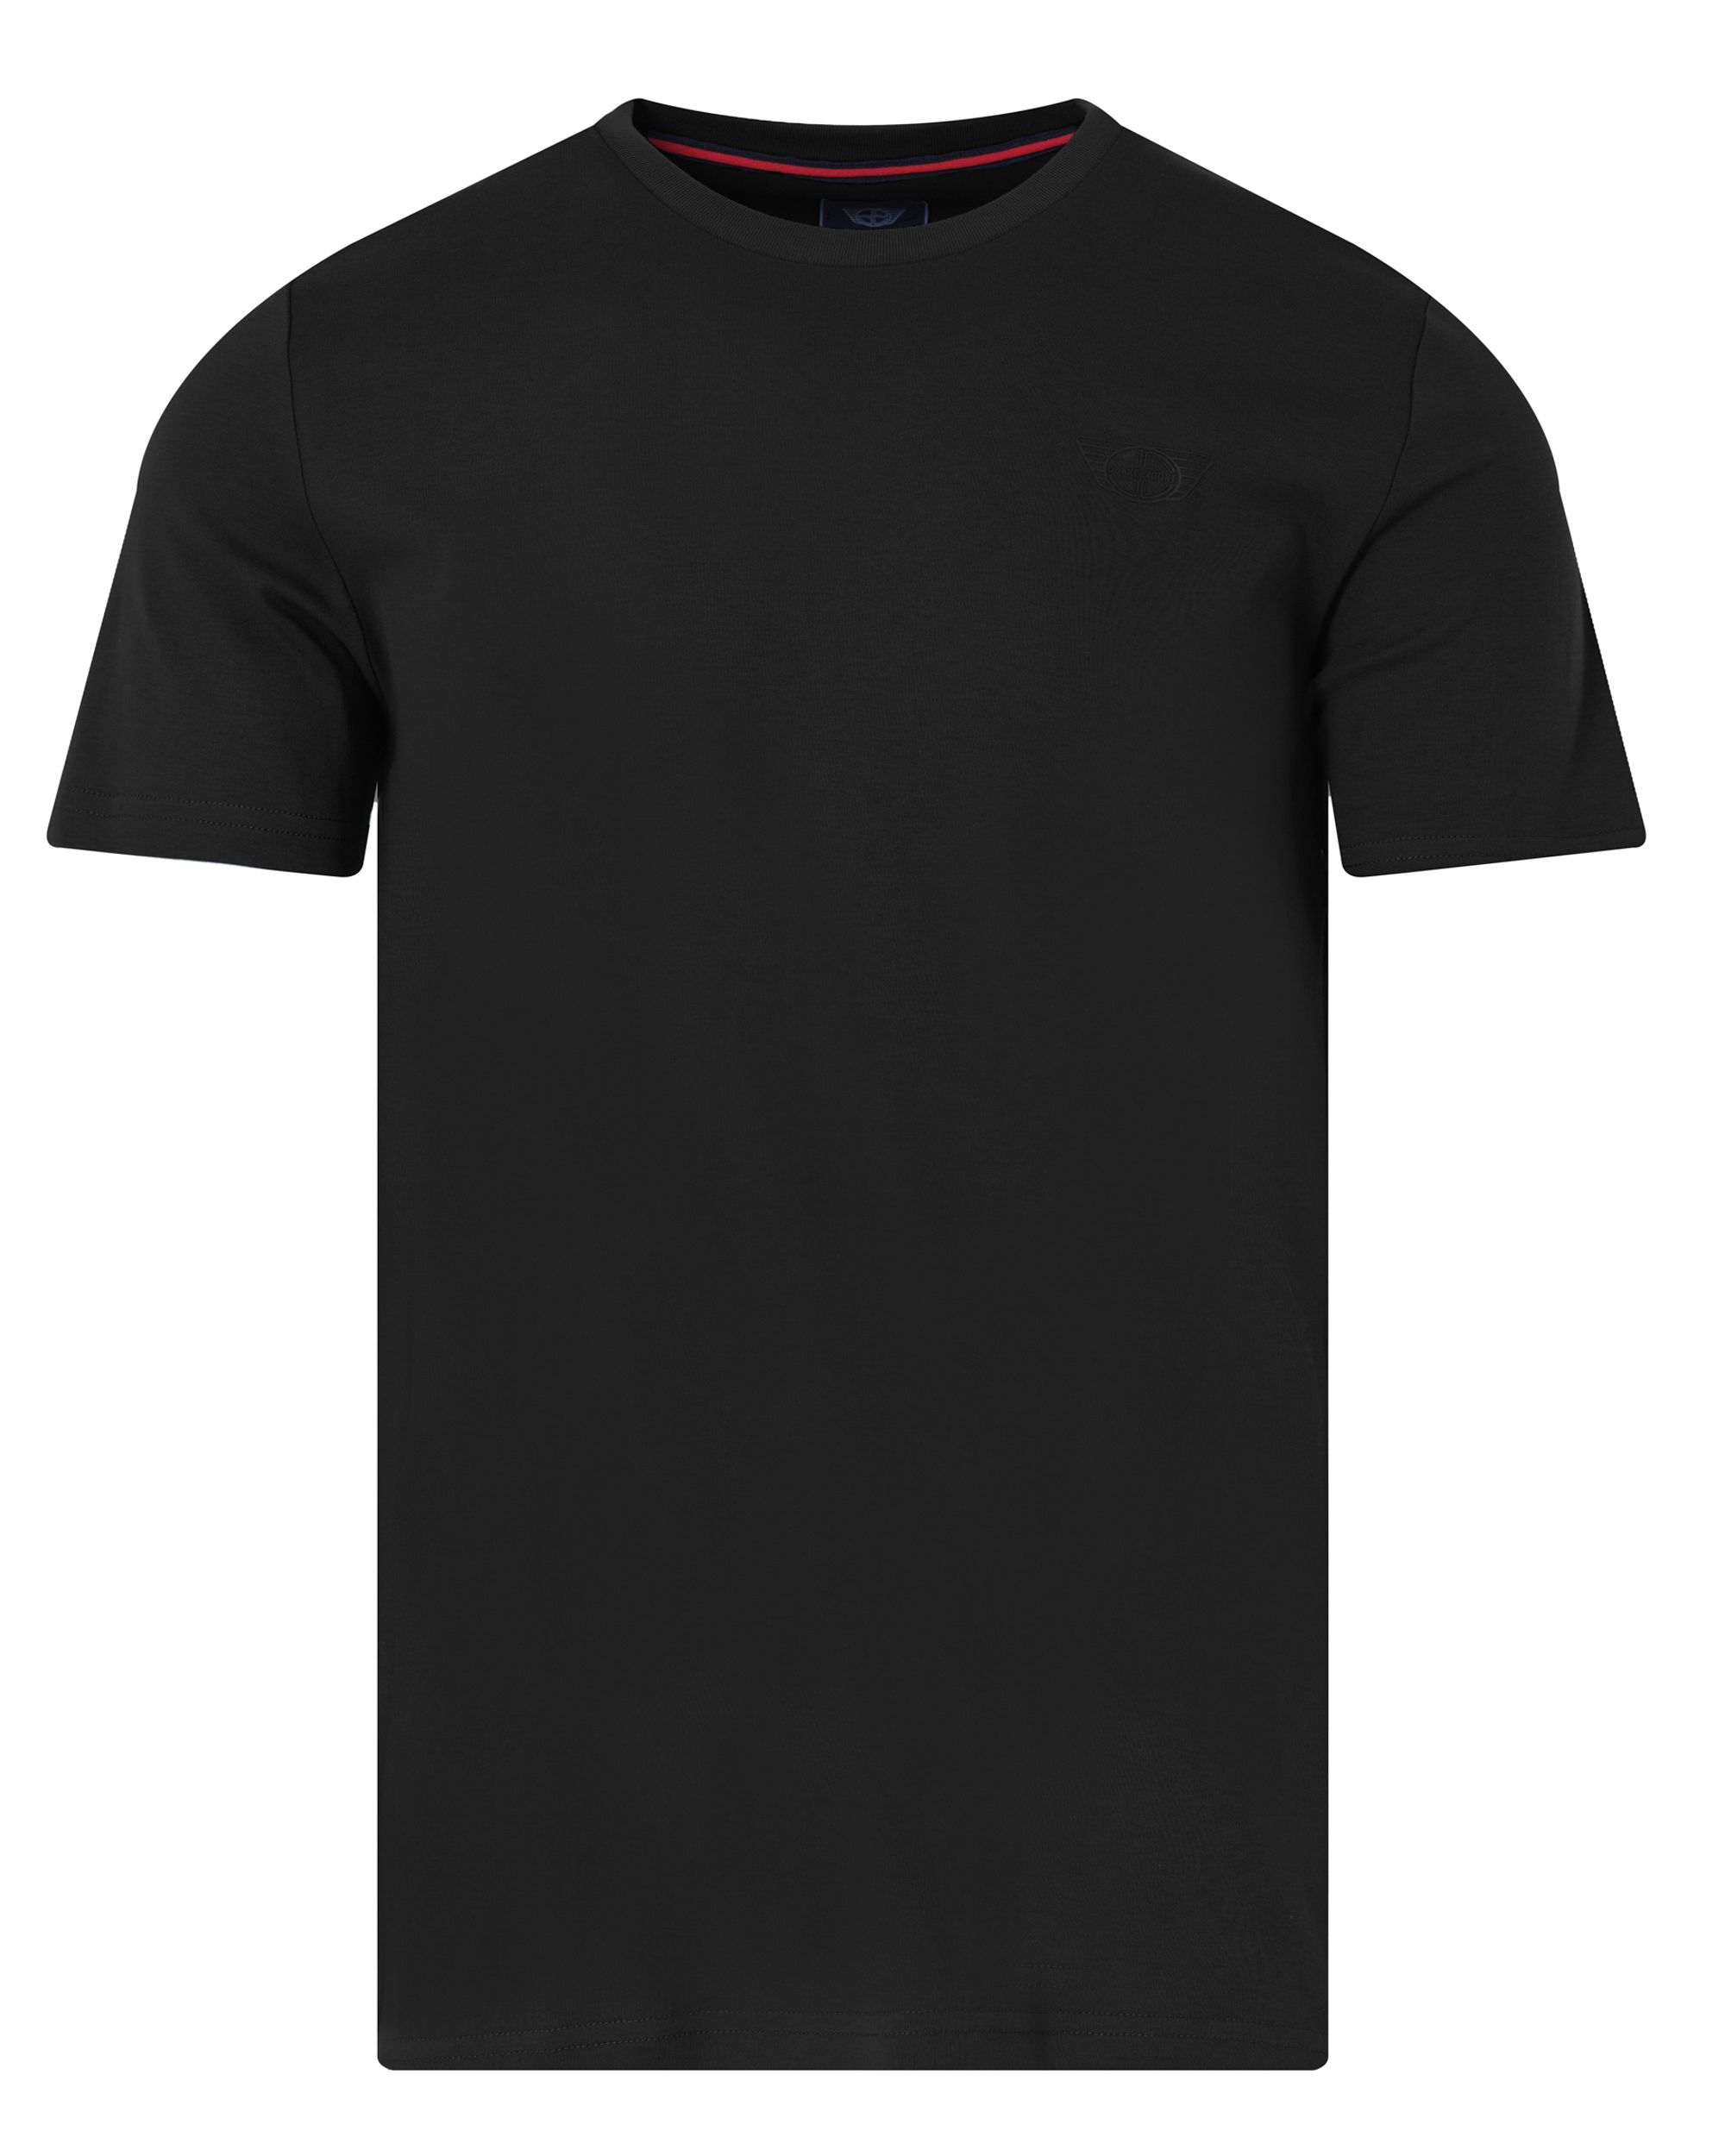 Donkervoort T-shirt KM Black 084112-004-L